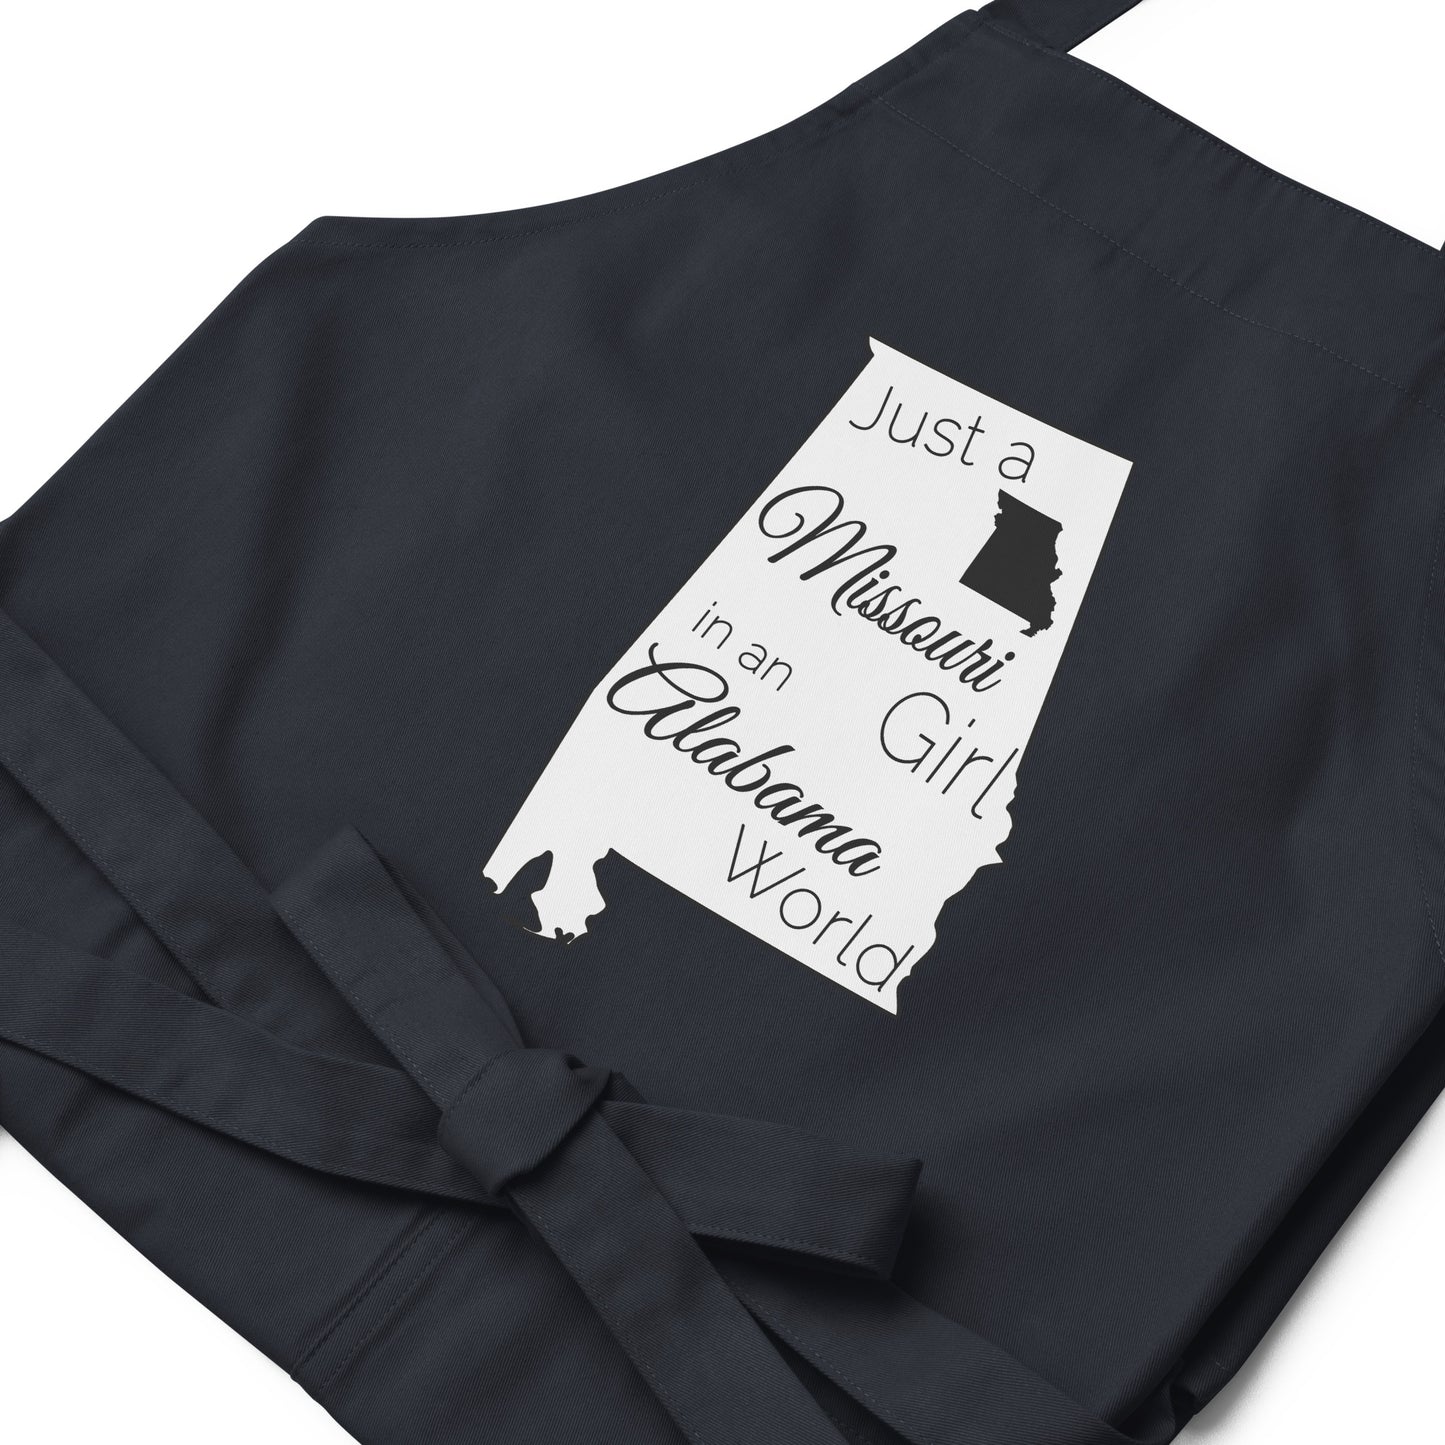 Just a Missouri Girl in an Alabama World Organic cotton apron